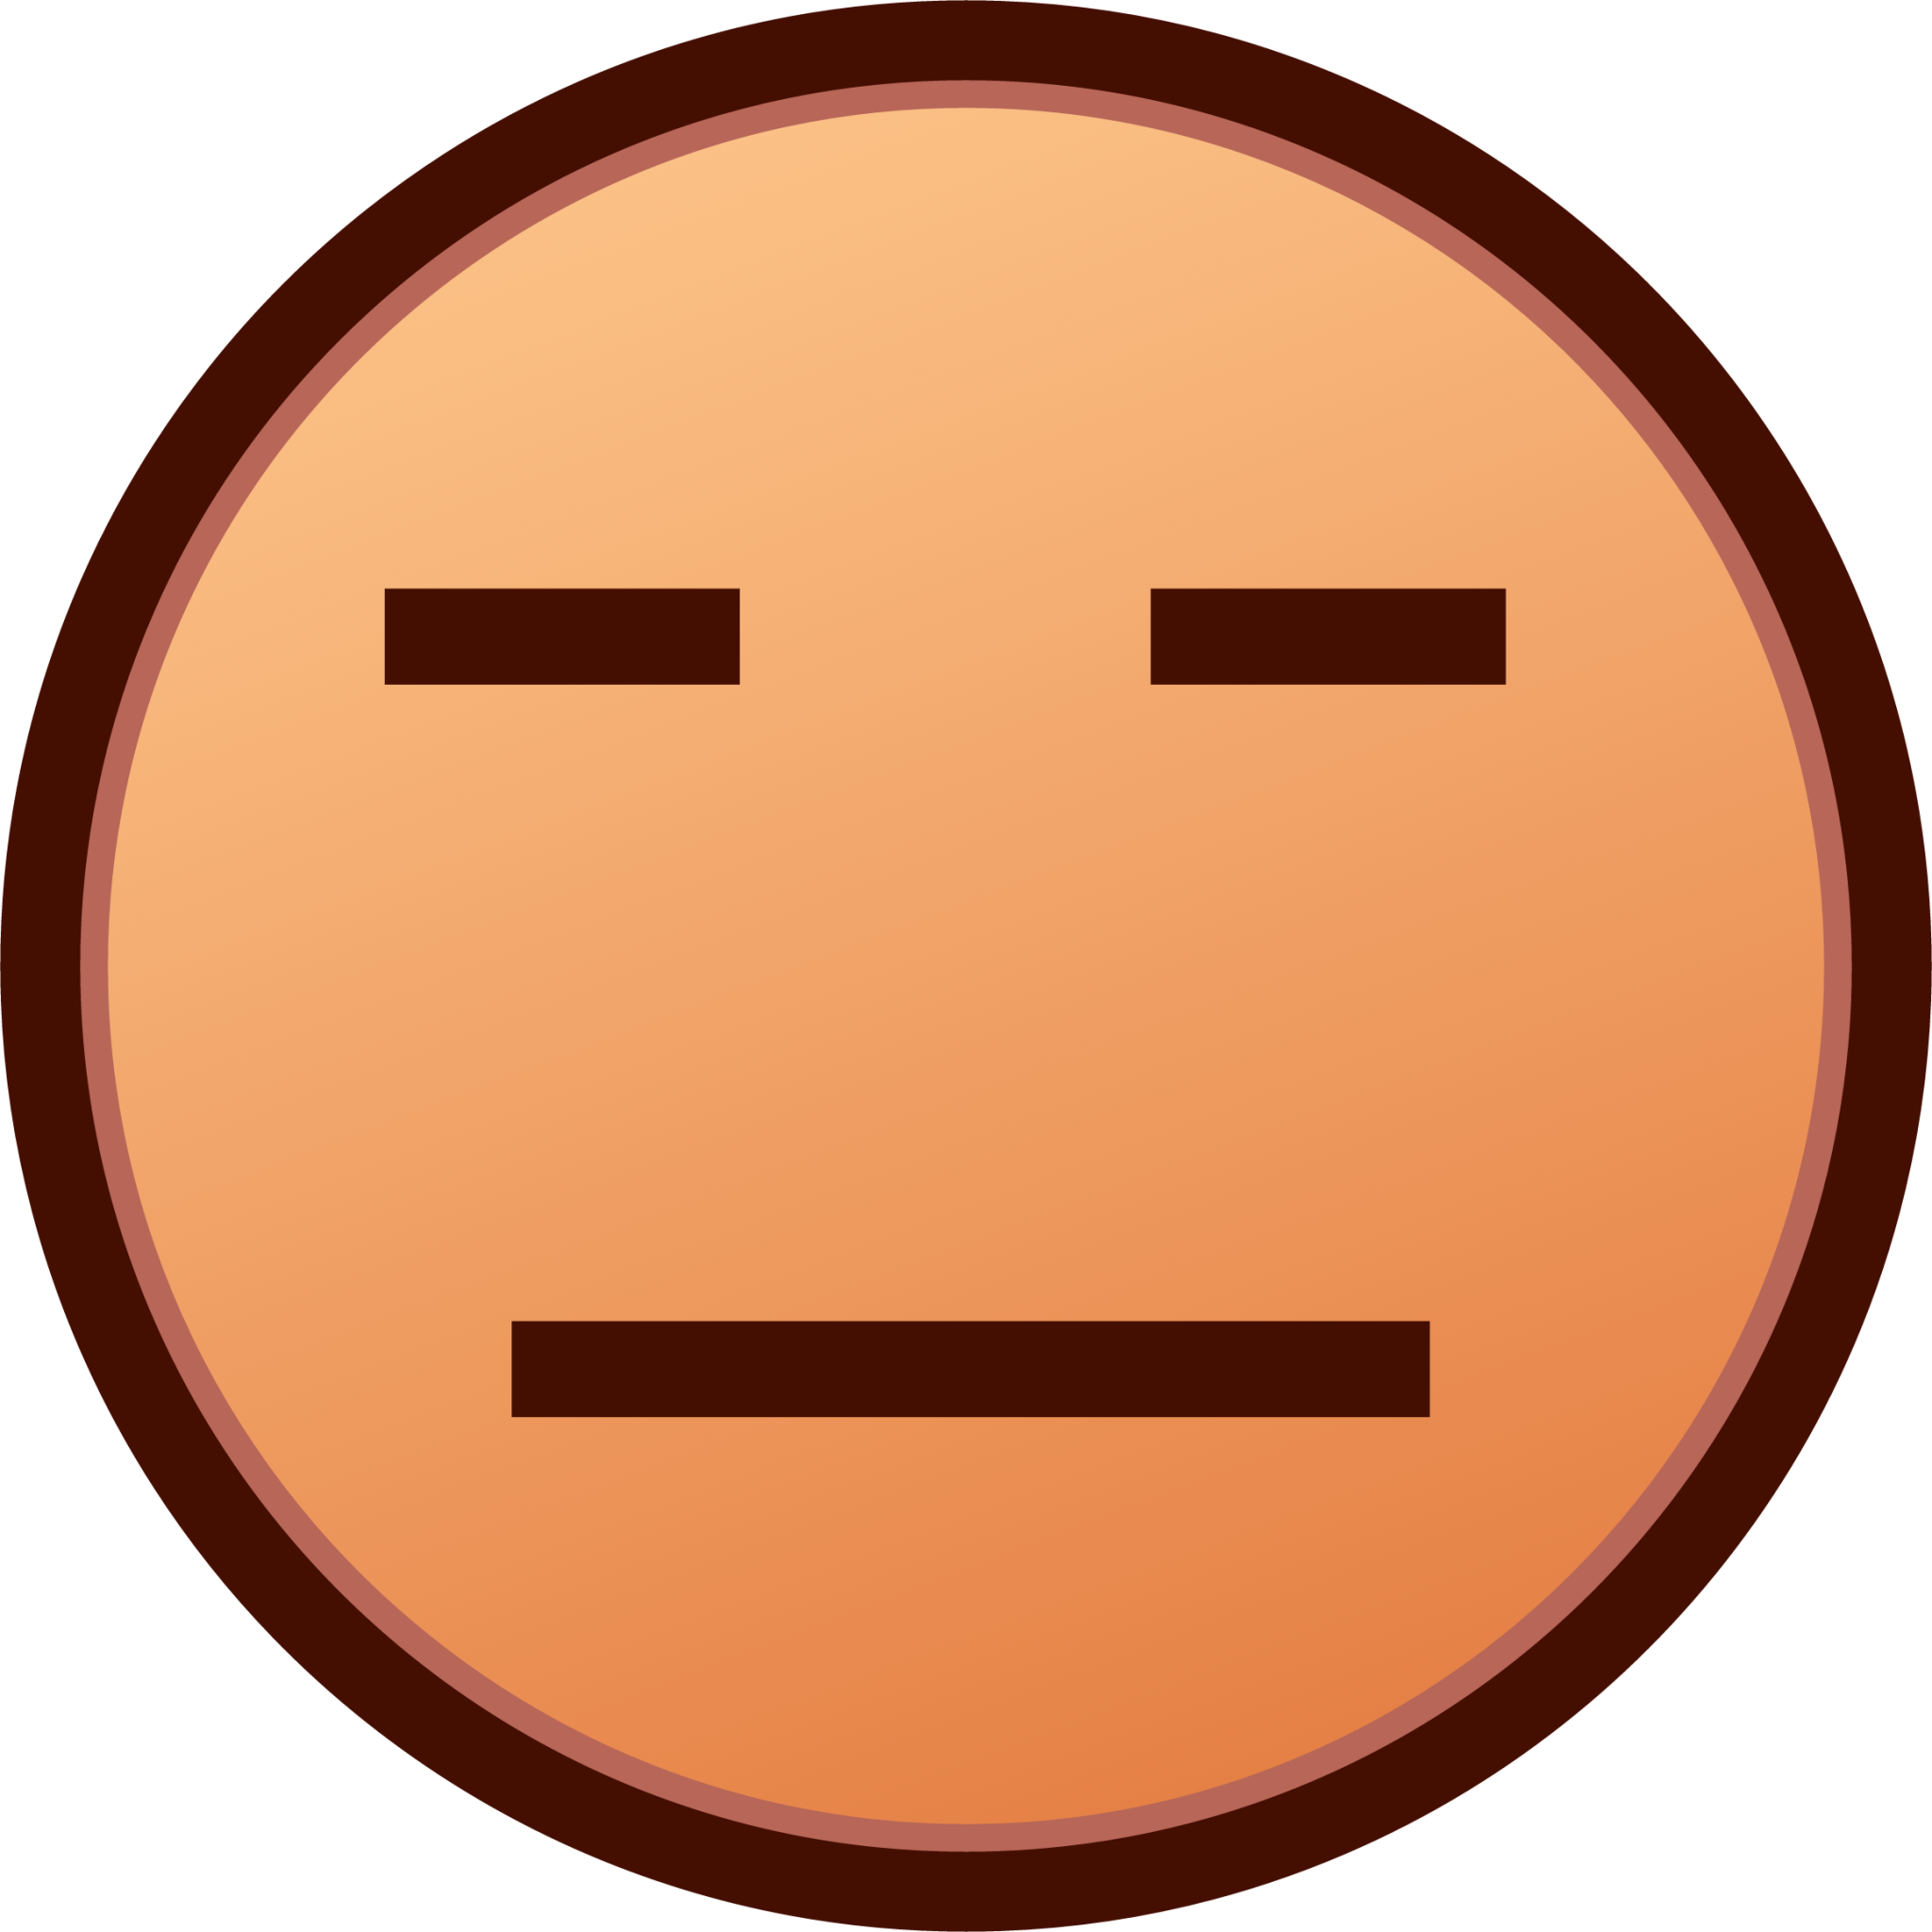 expressionless (yellow) emoji